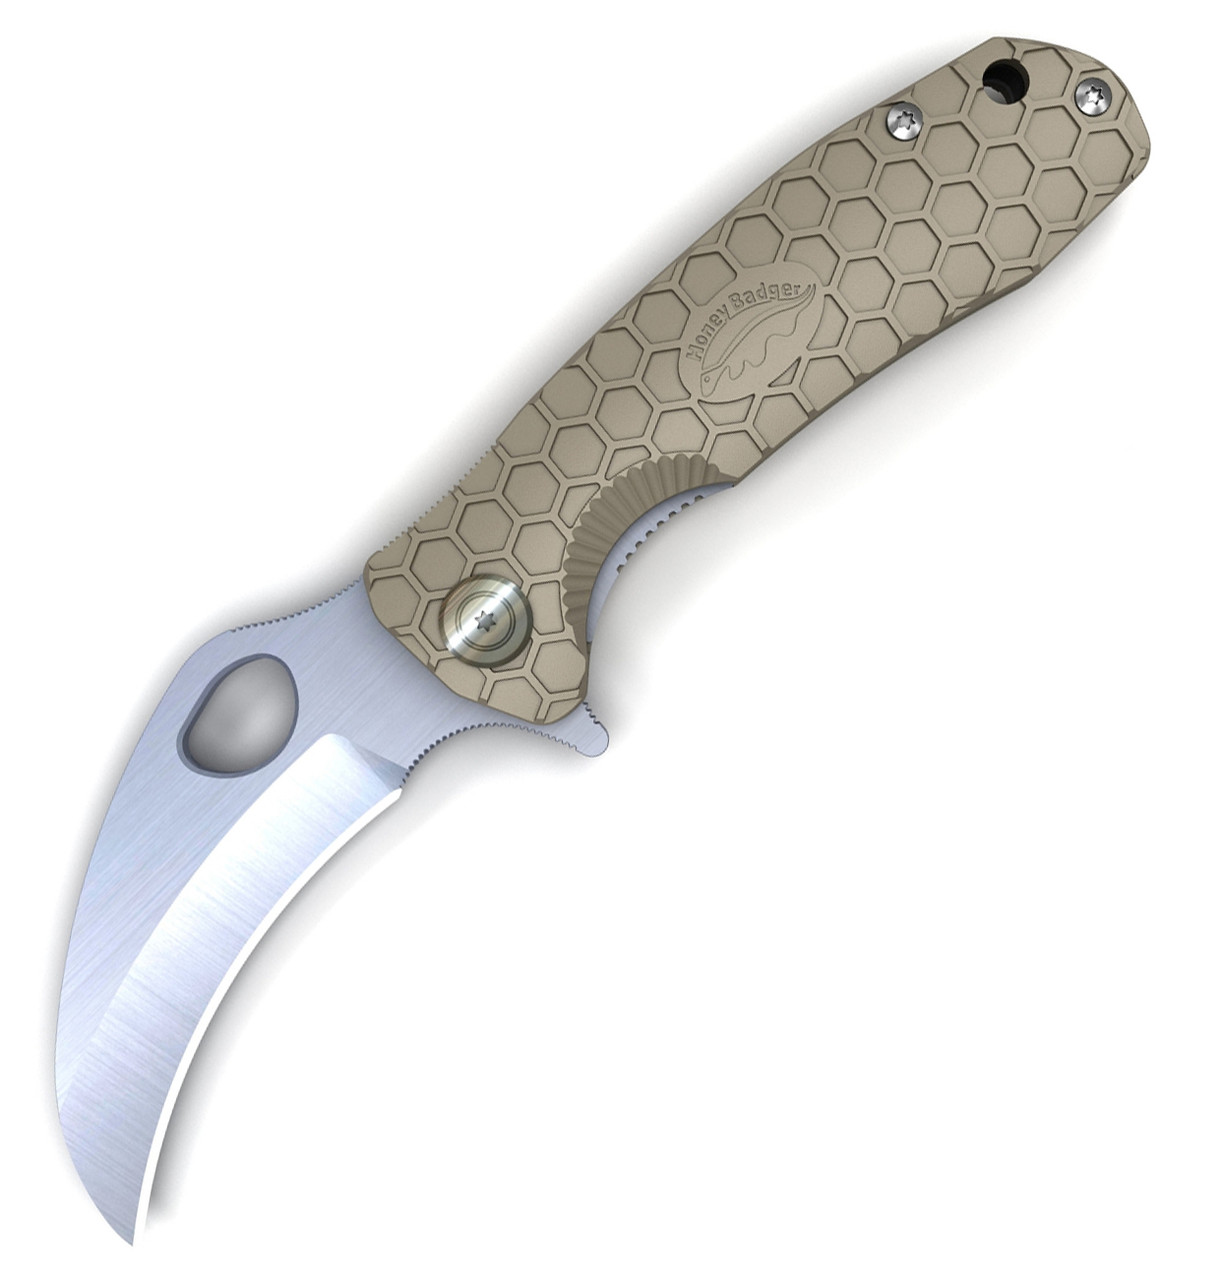 Honey Badger Knives Medium Claw Flipper HB1122, 3.0" 8Cr13Mov Claw Blade, Tan FRN Handle